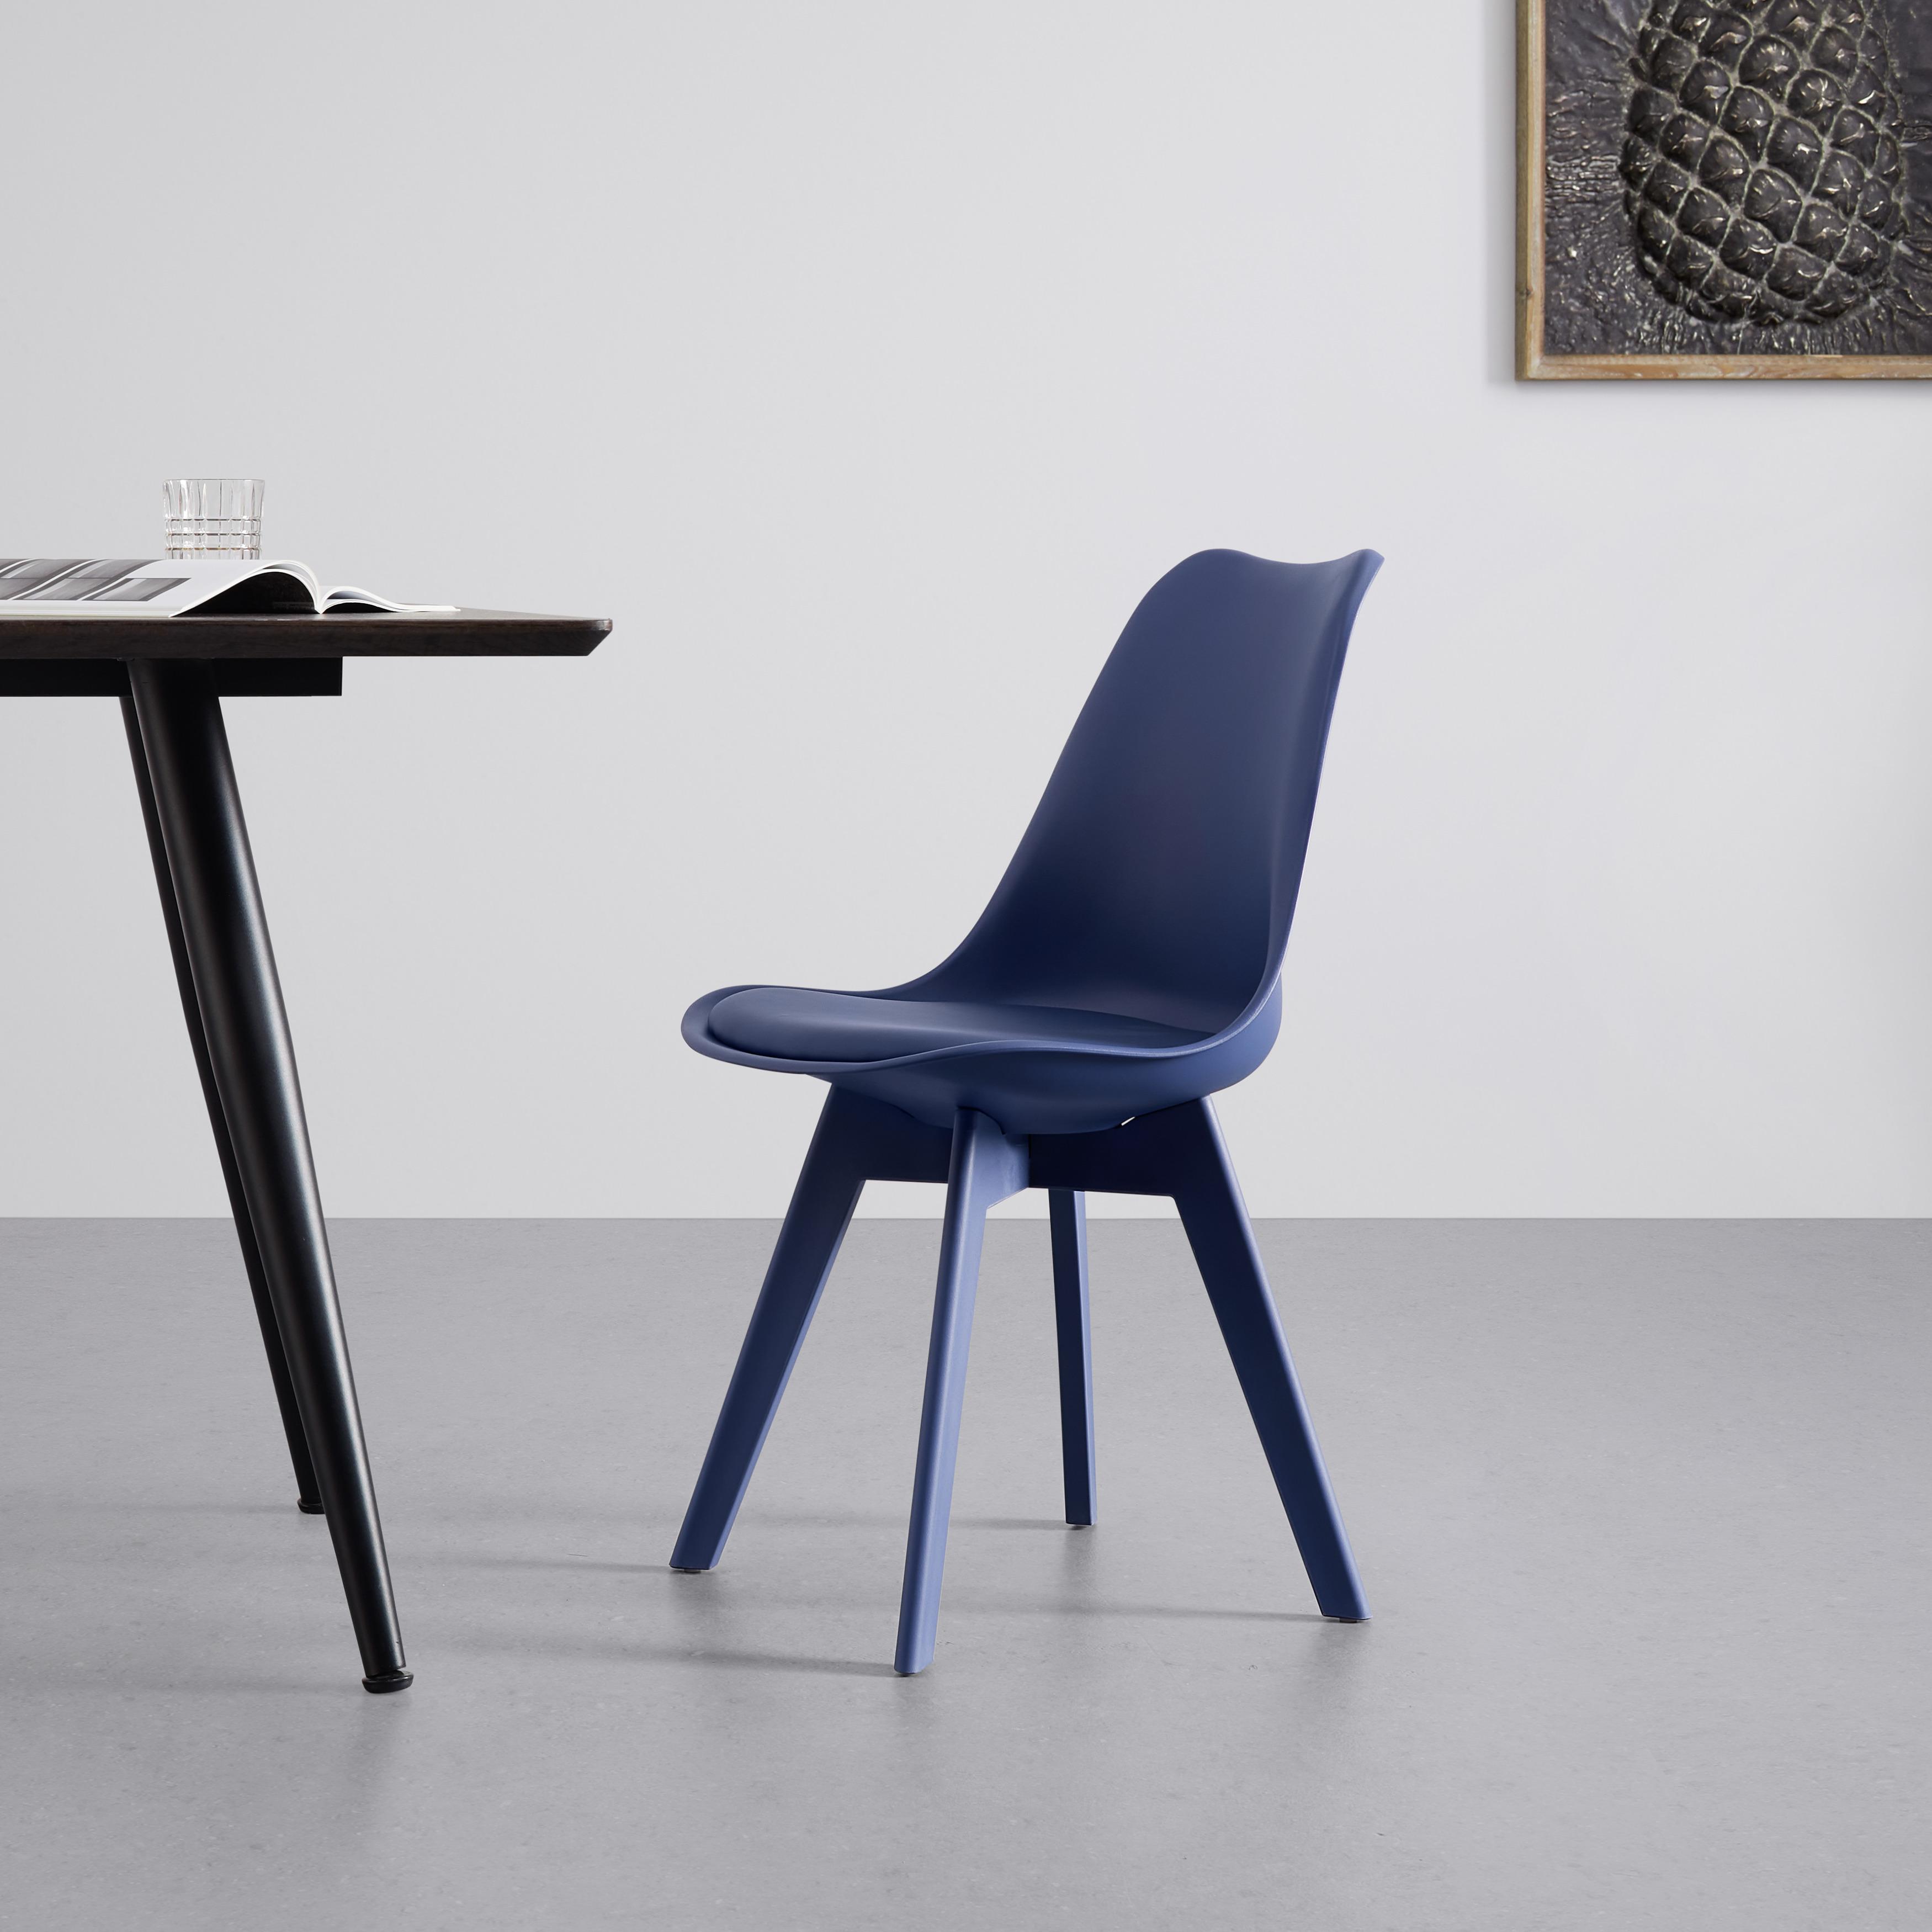 Stuhl "Mia", Lederlook, blau, Gepolstert - Blau, MODERN, Kunststoff/Textil (50/84/54cm) - Bessagi Home